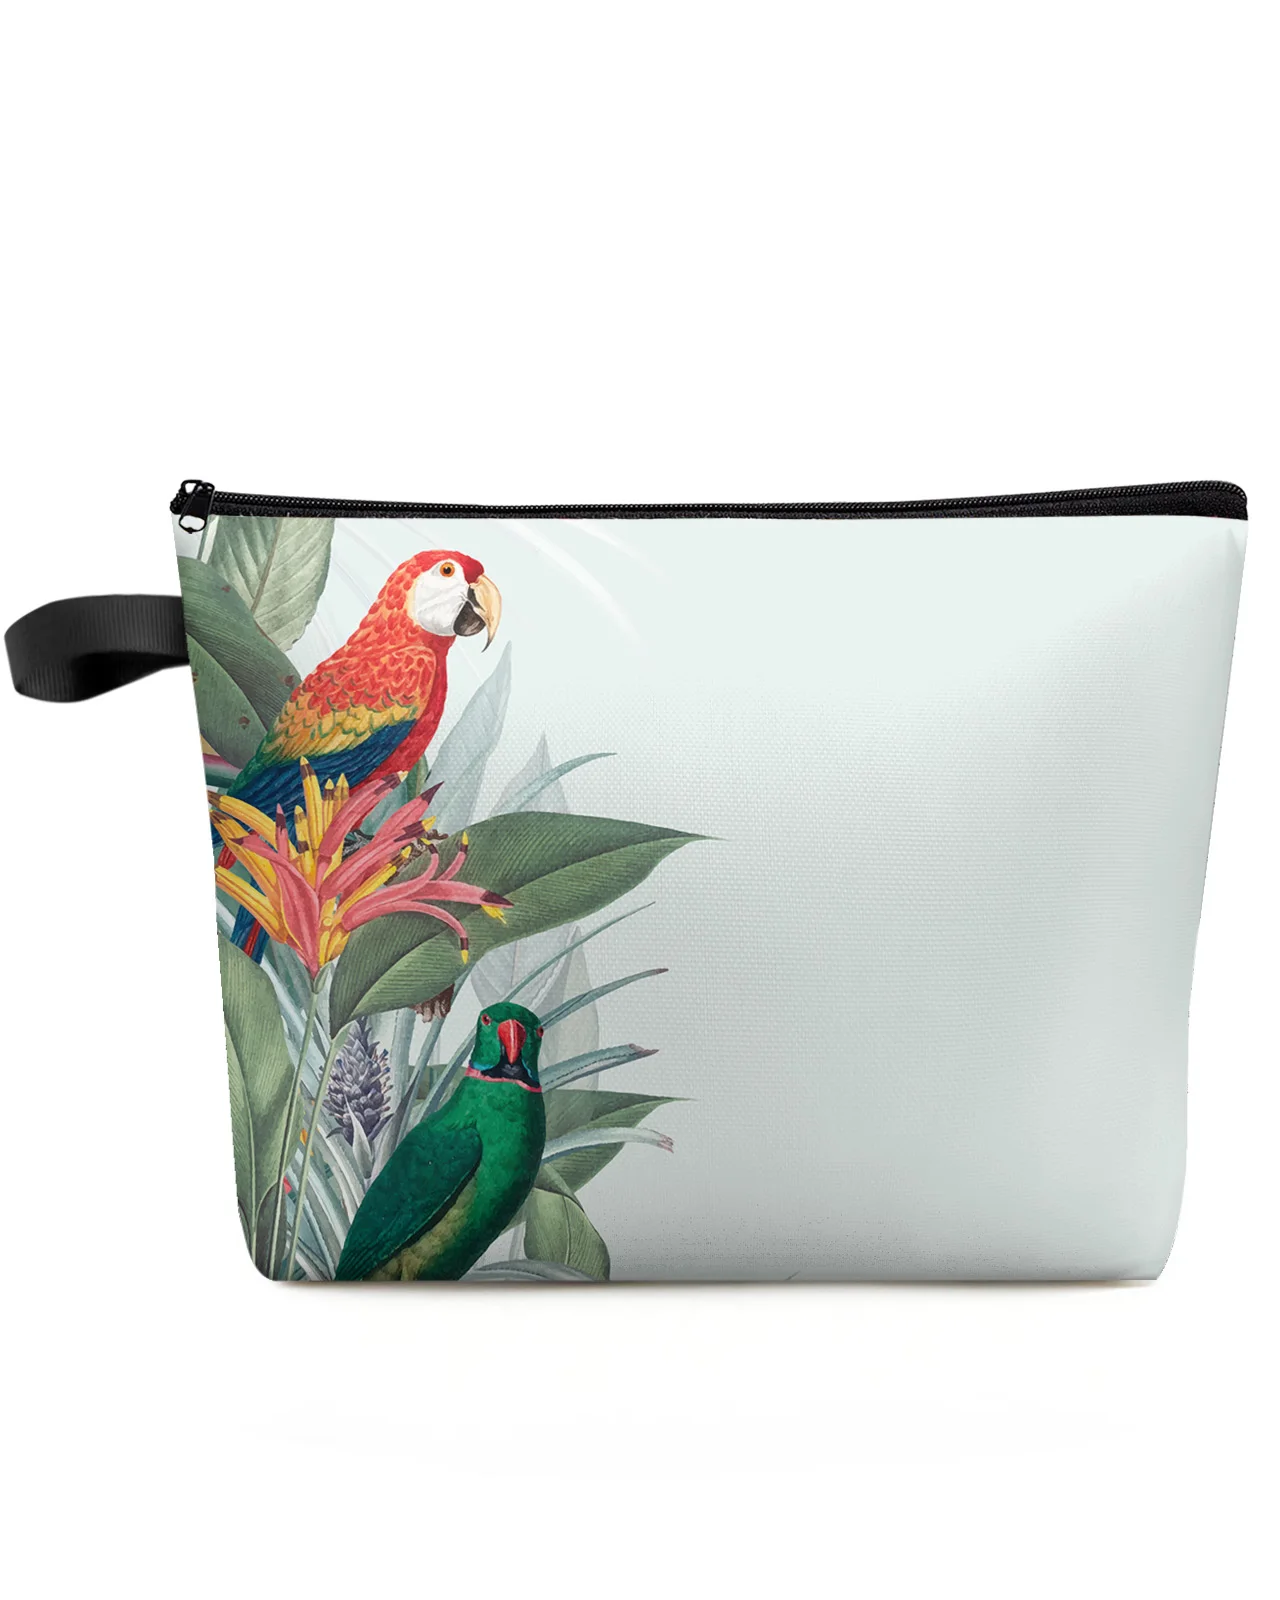 

Parrot Bird Flower Leaves Makeup Bag Pouch Travel Essentials Lady Women Cosmetic Bags Toilet Organizer Kids Storage Pencil Case